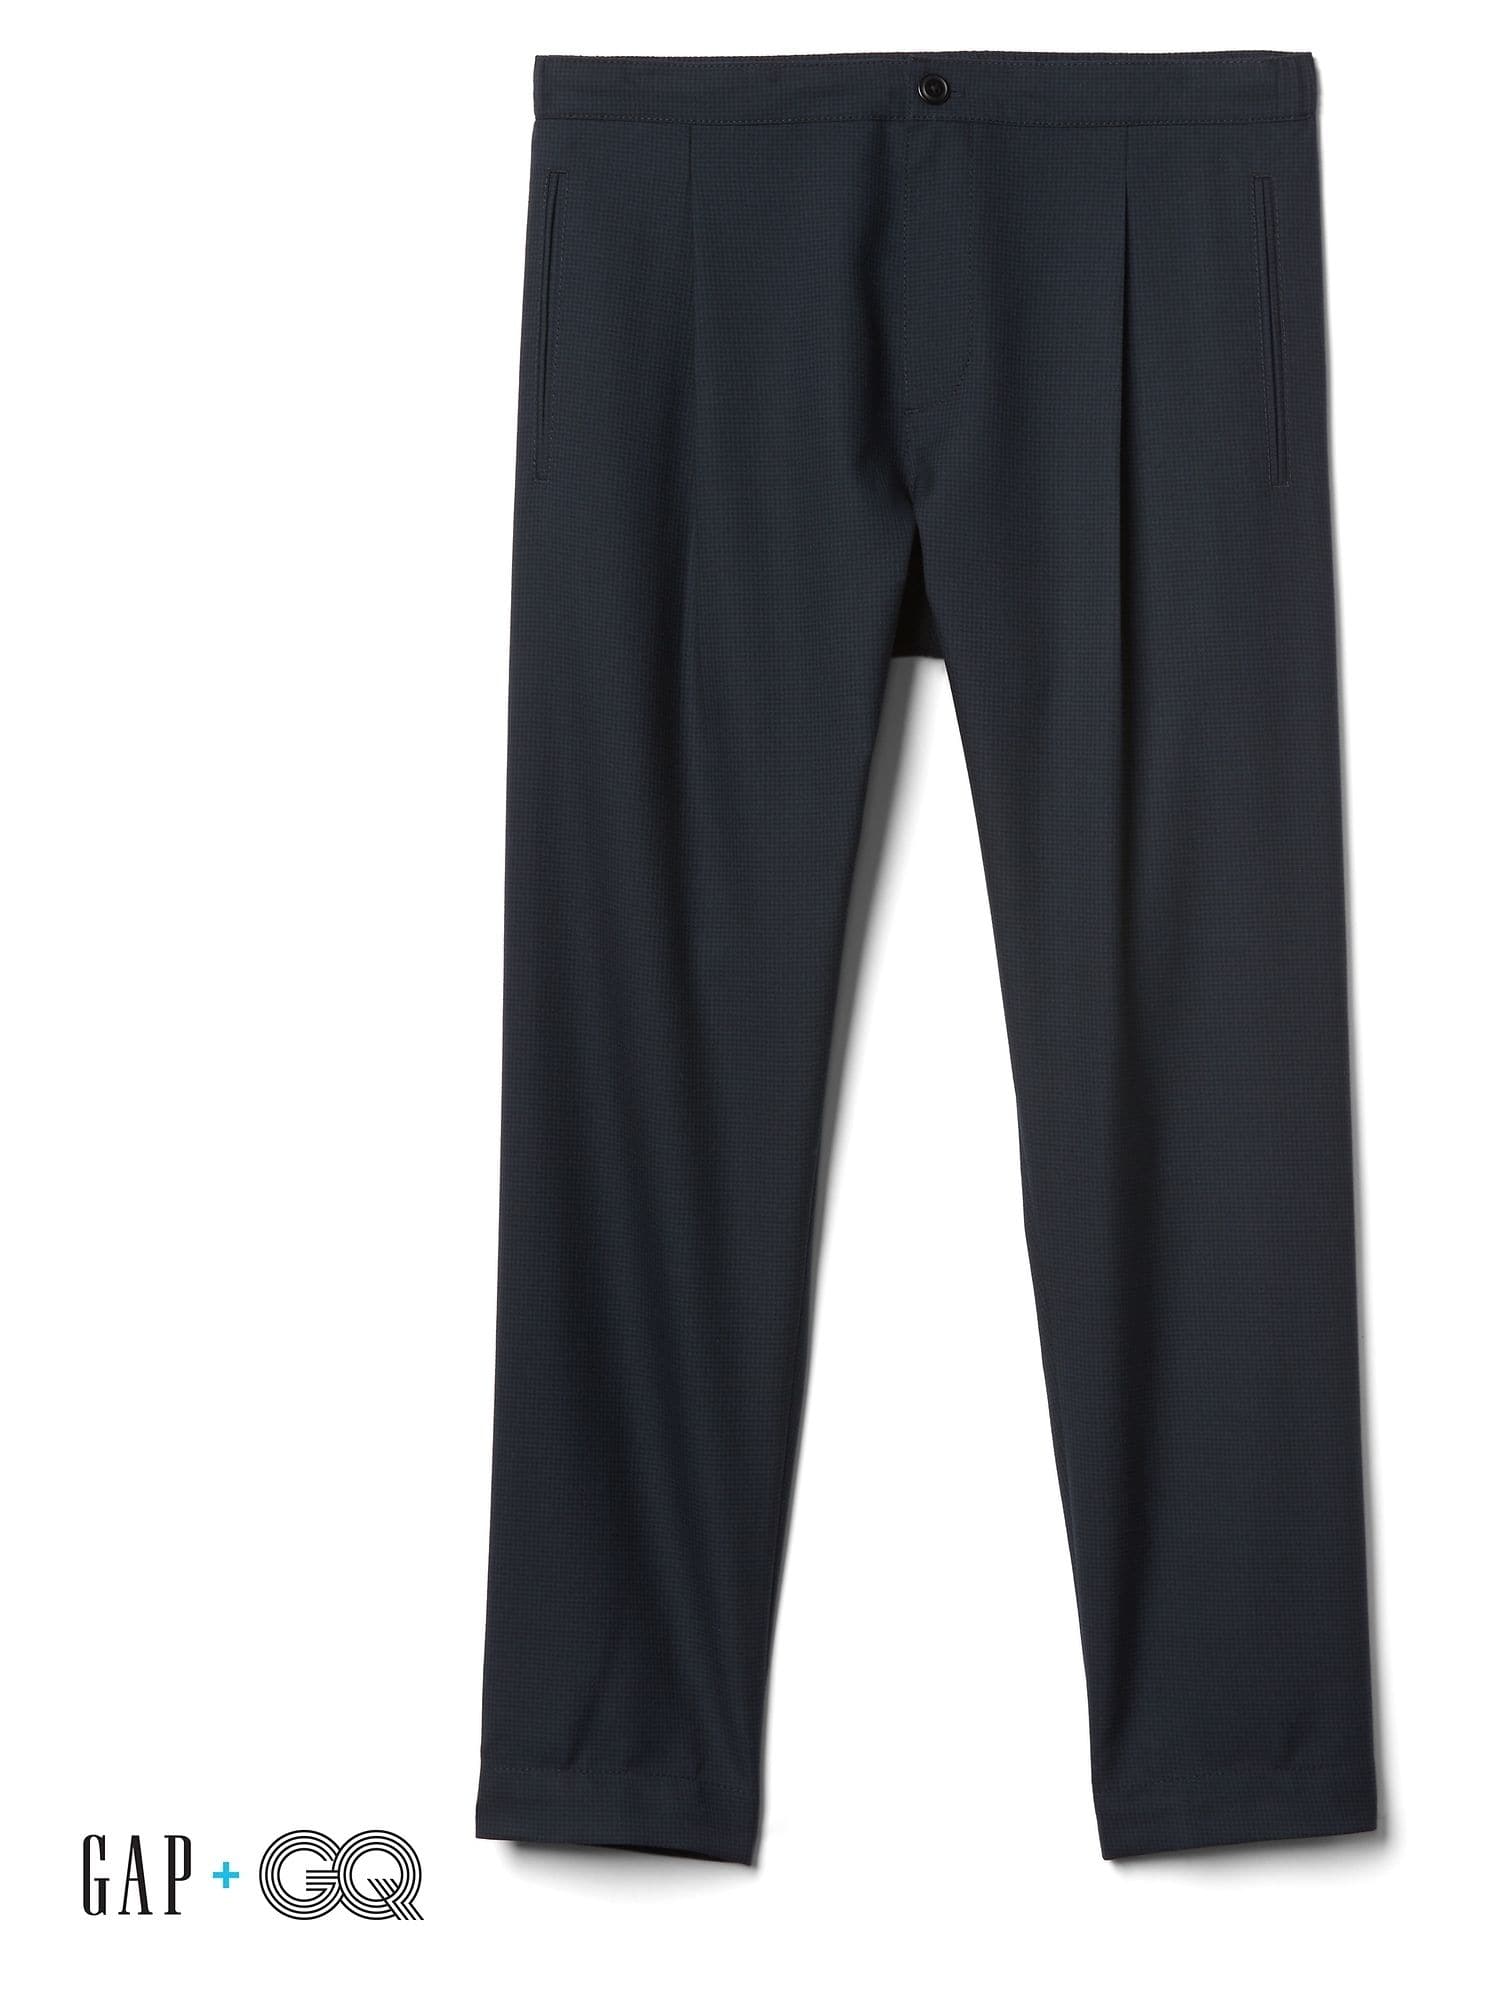 Gap + GQ UA suit pants - True indigo